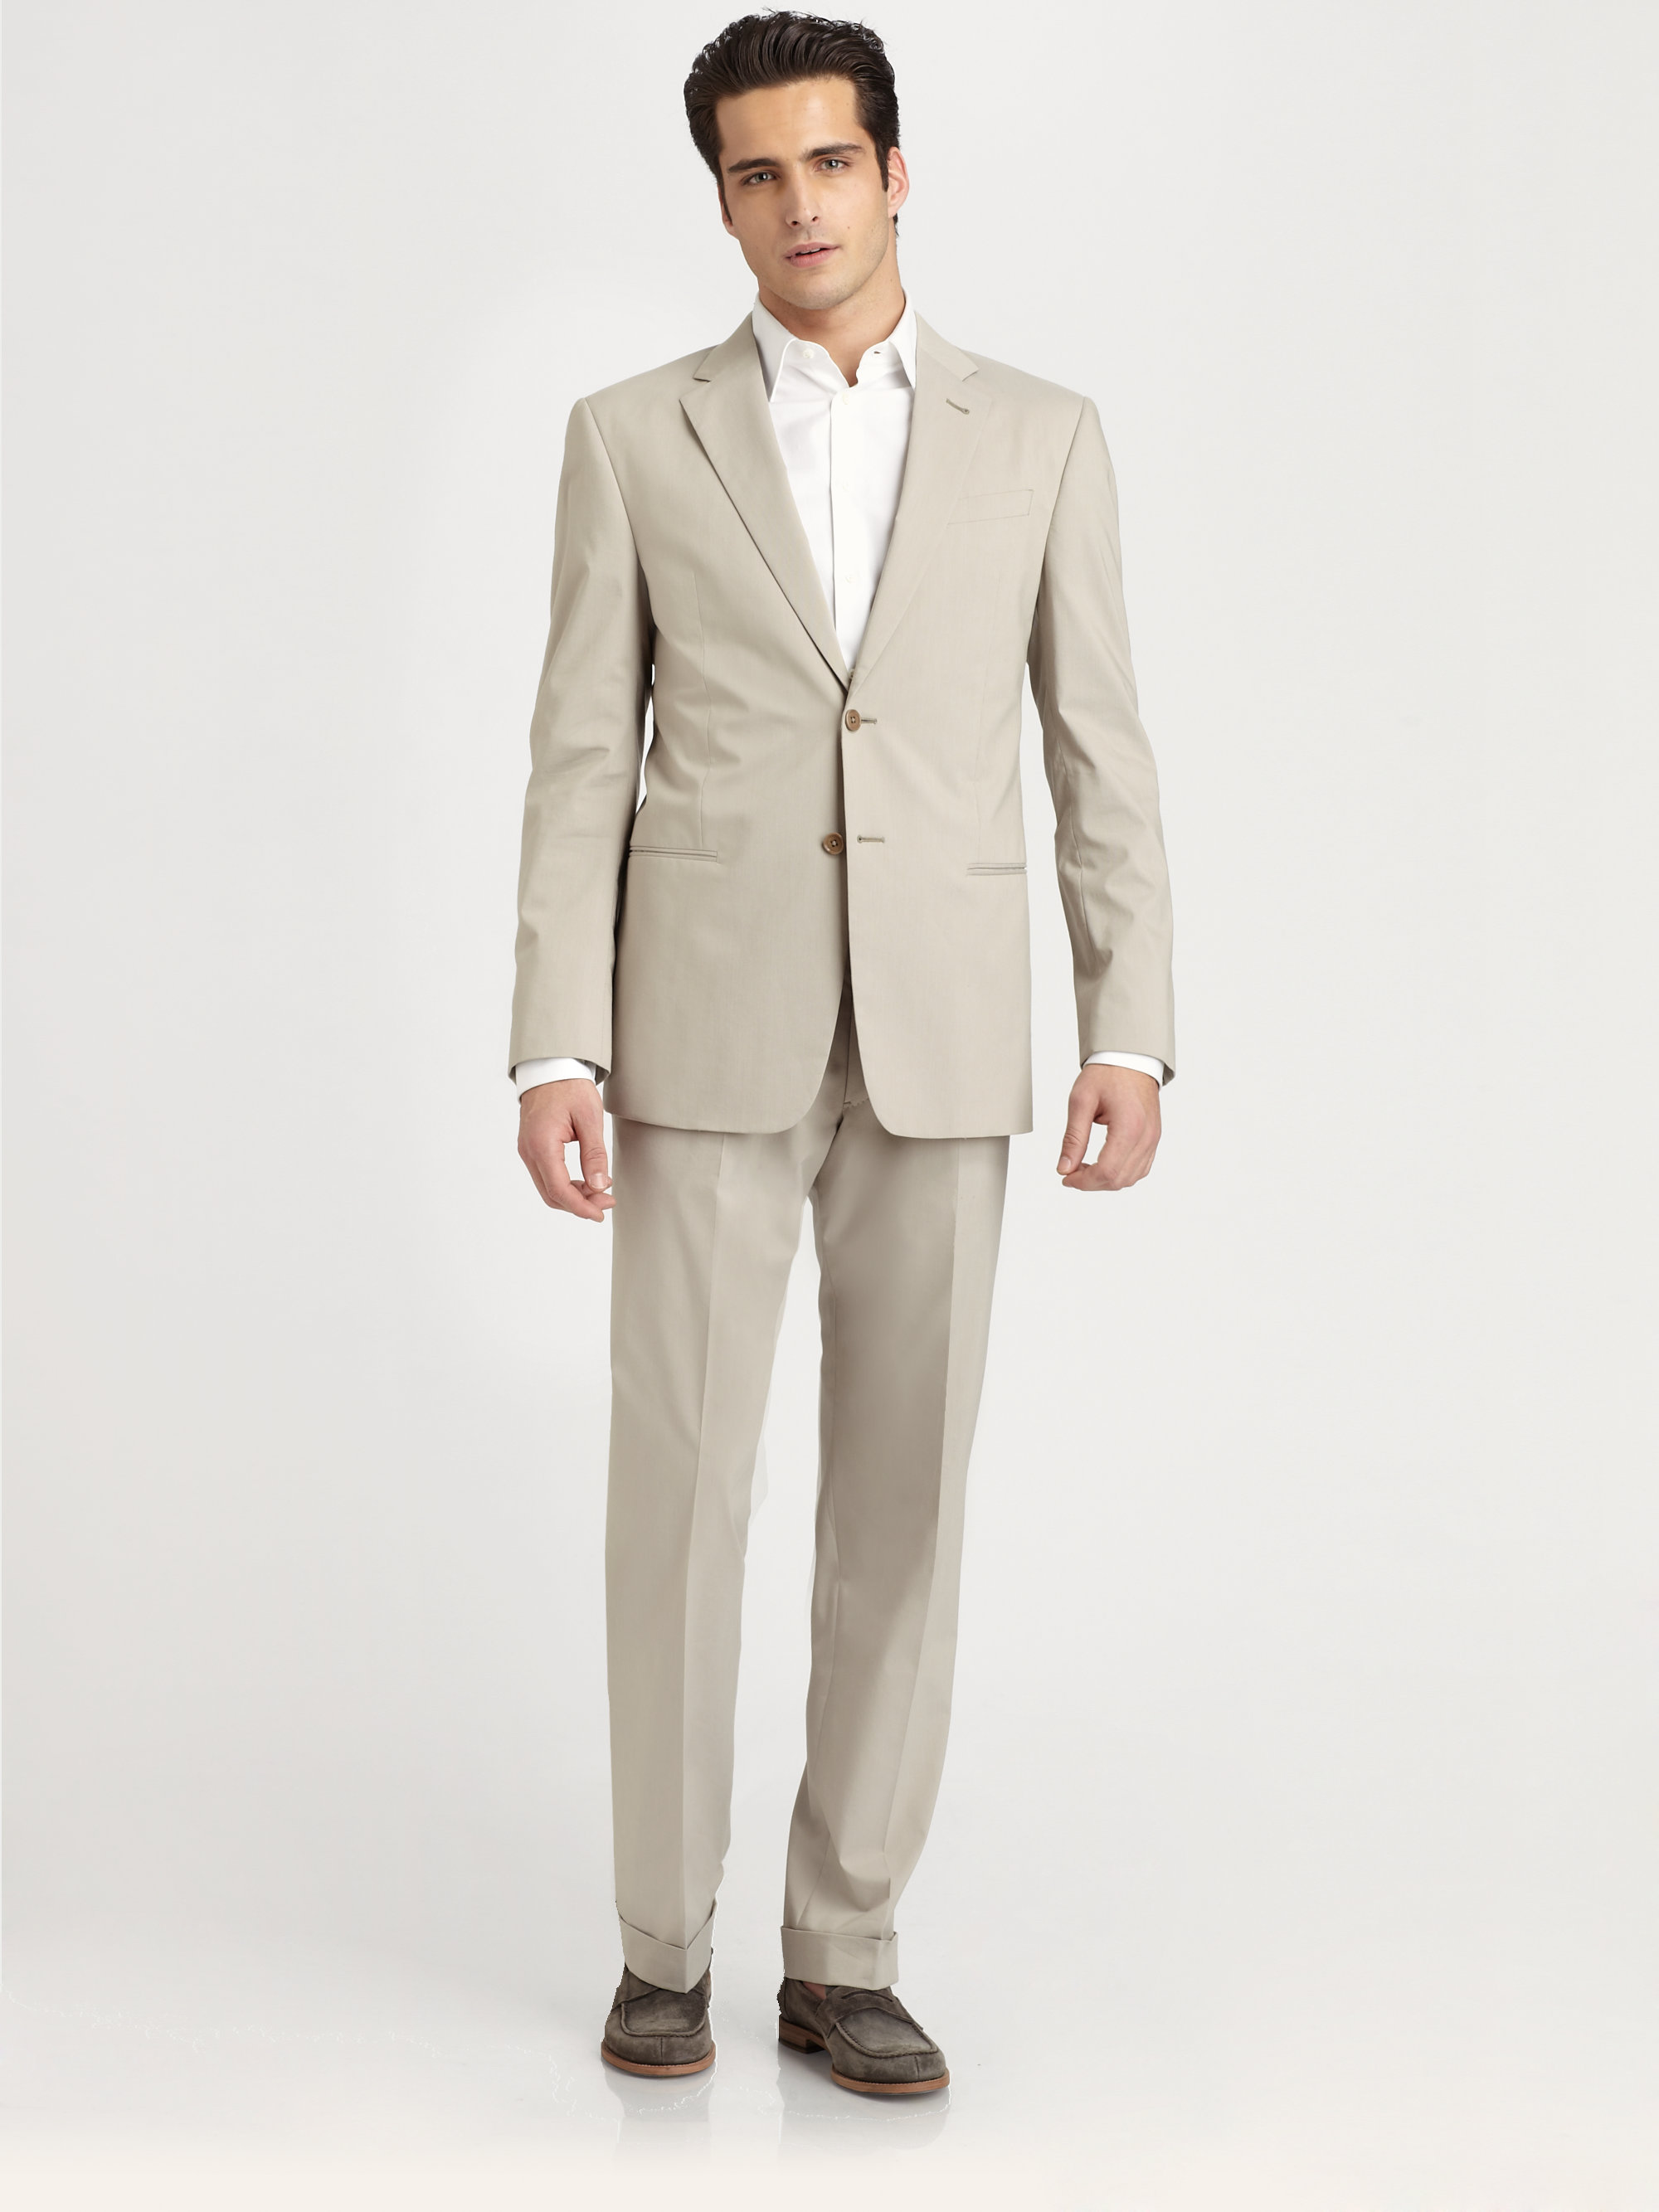 Armani Suits For Men Lupon Gov Ph